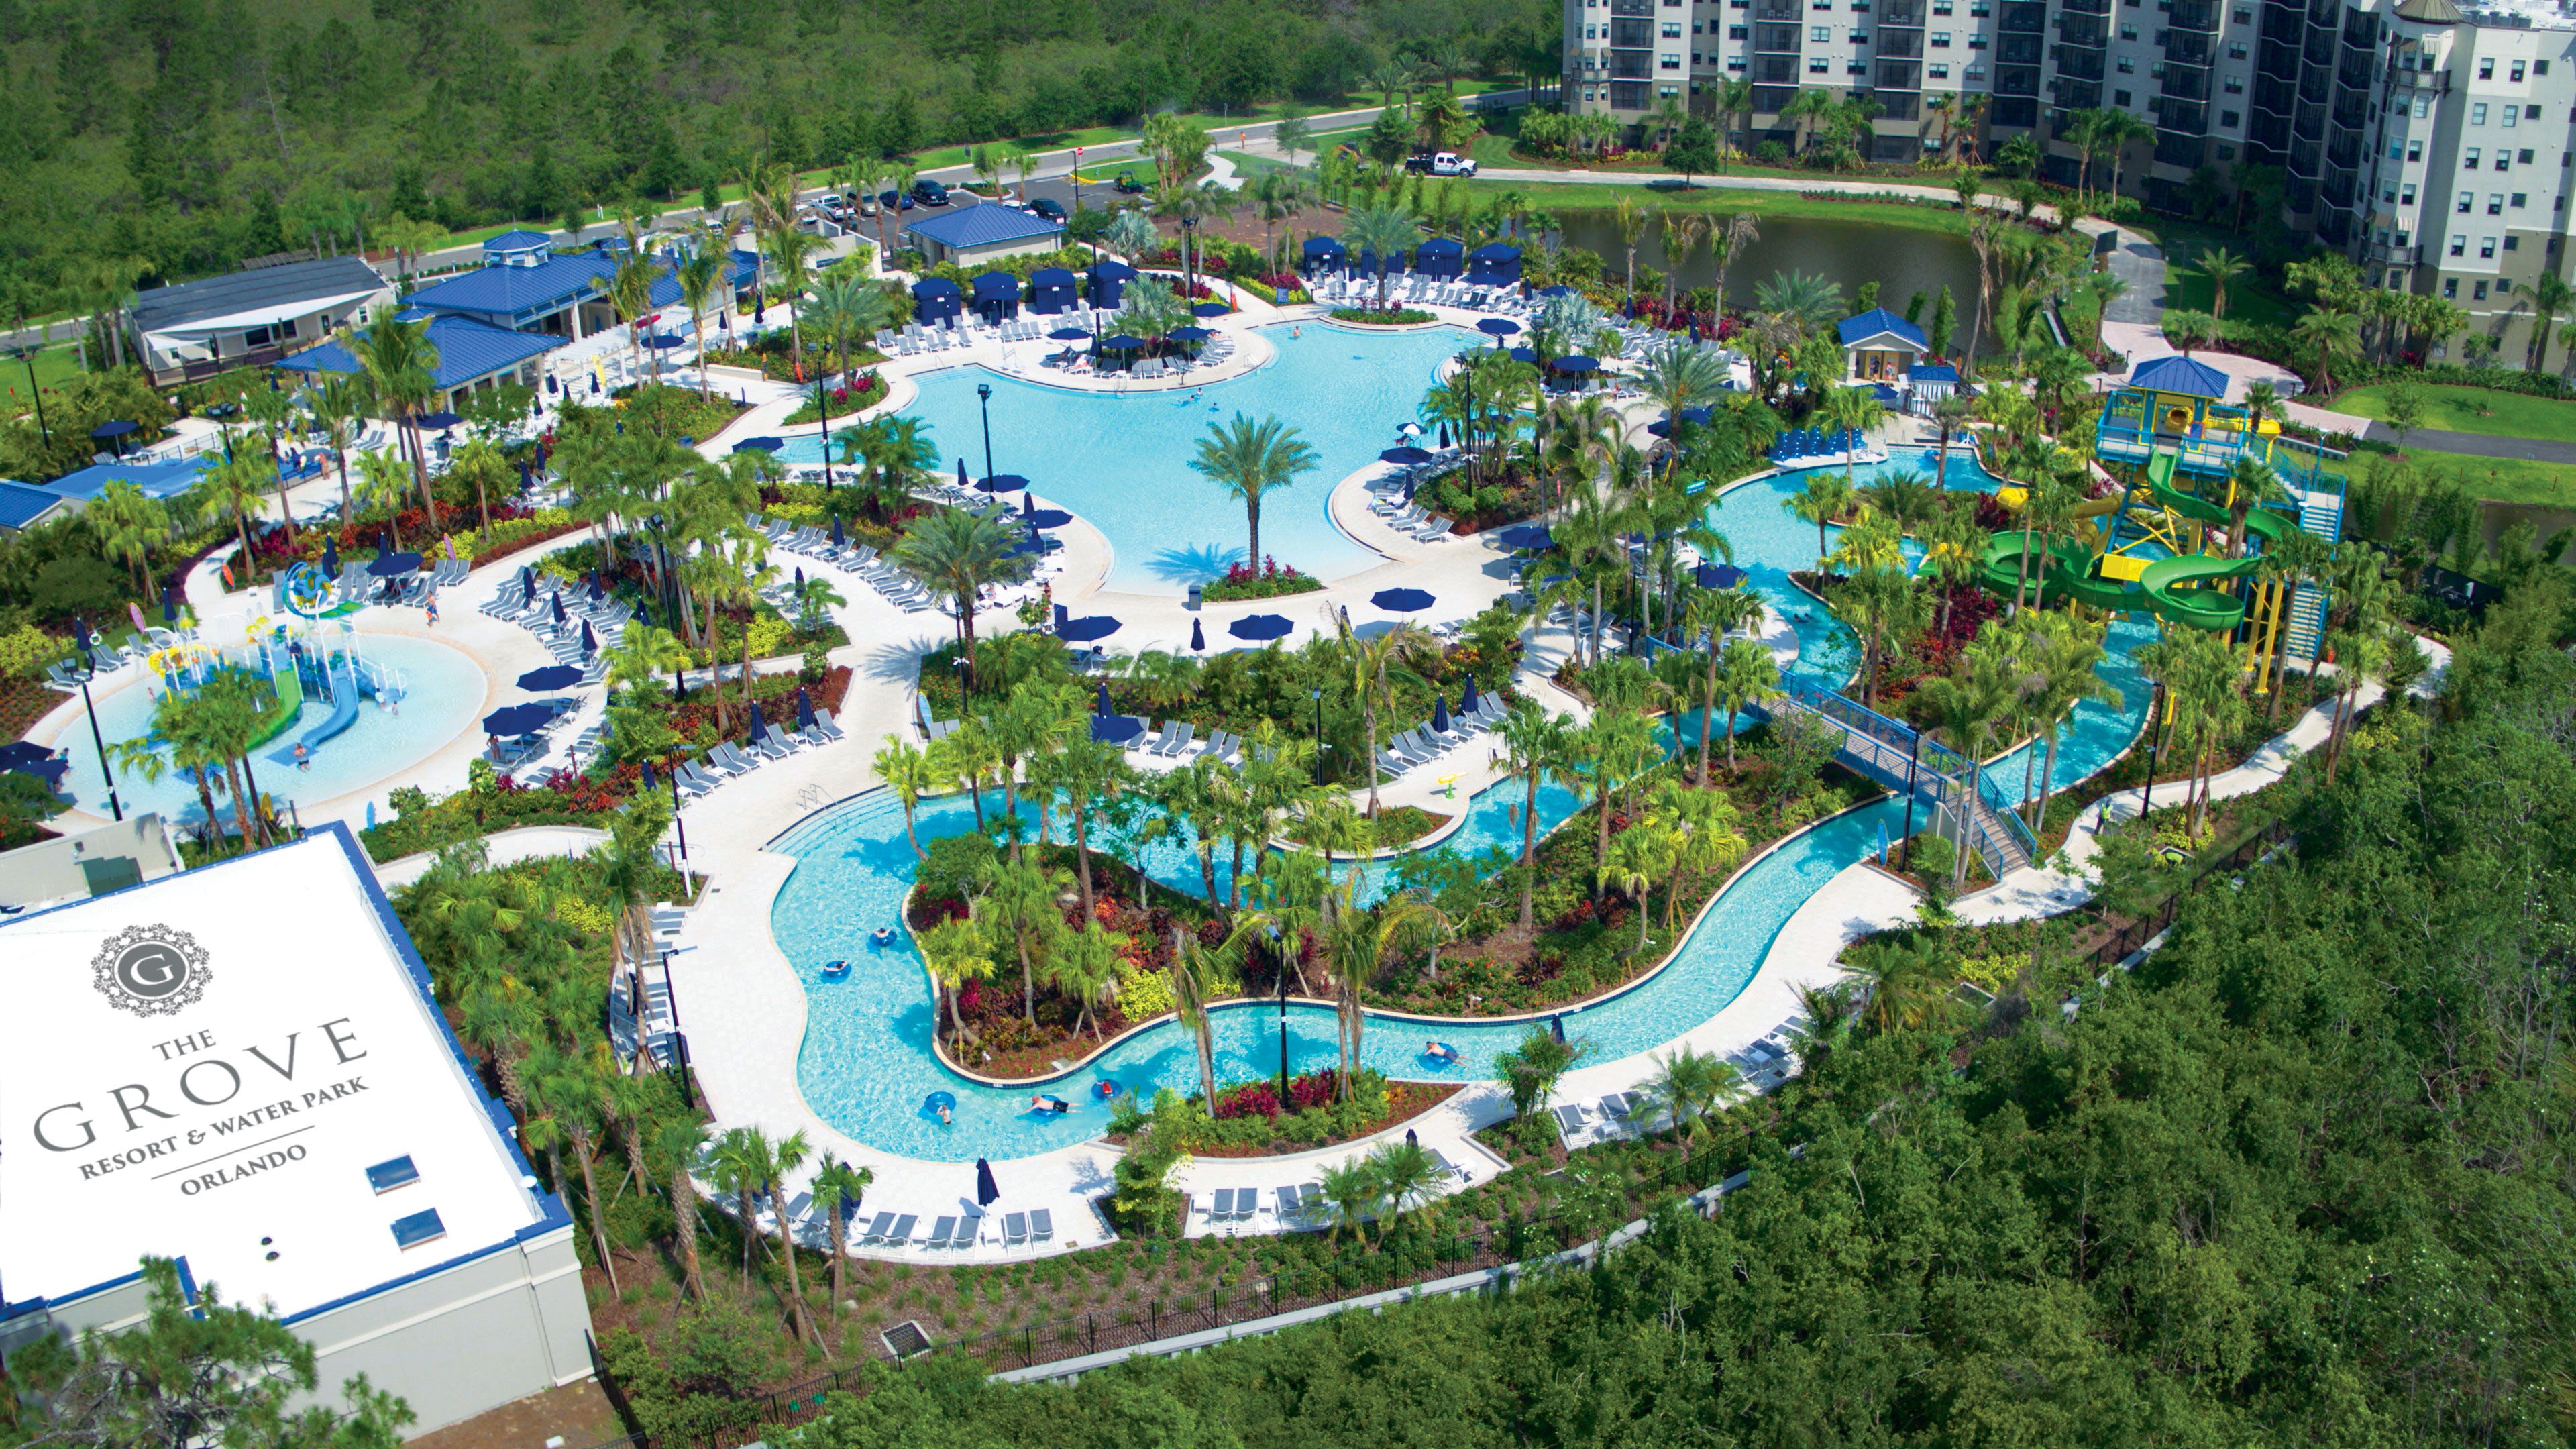 The Terraces at The Grove Resort, Orlando, FL Condo Hotel Units for Sale